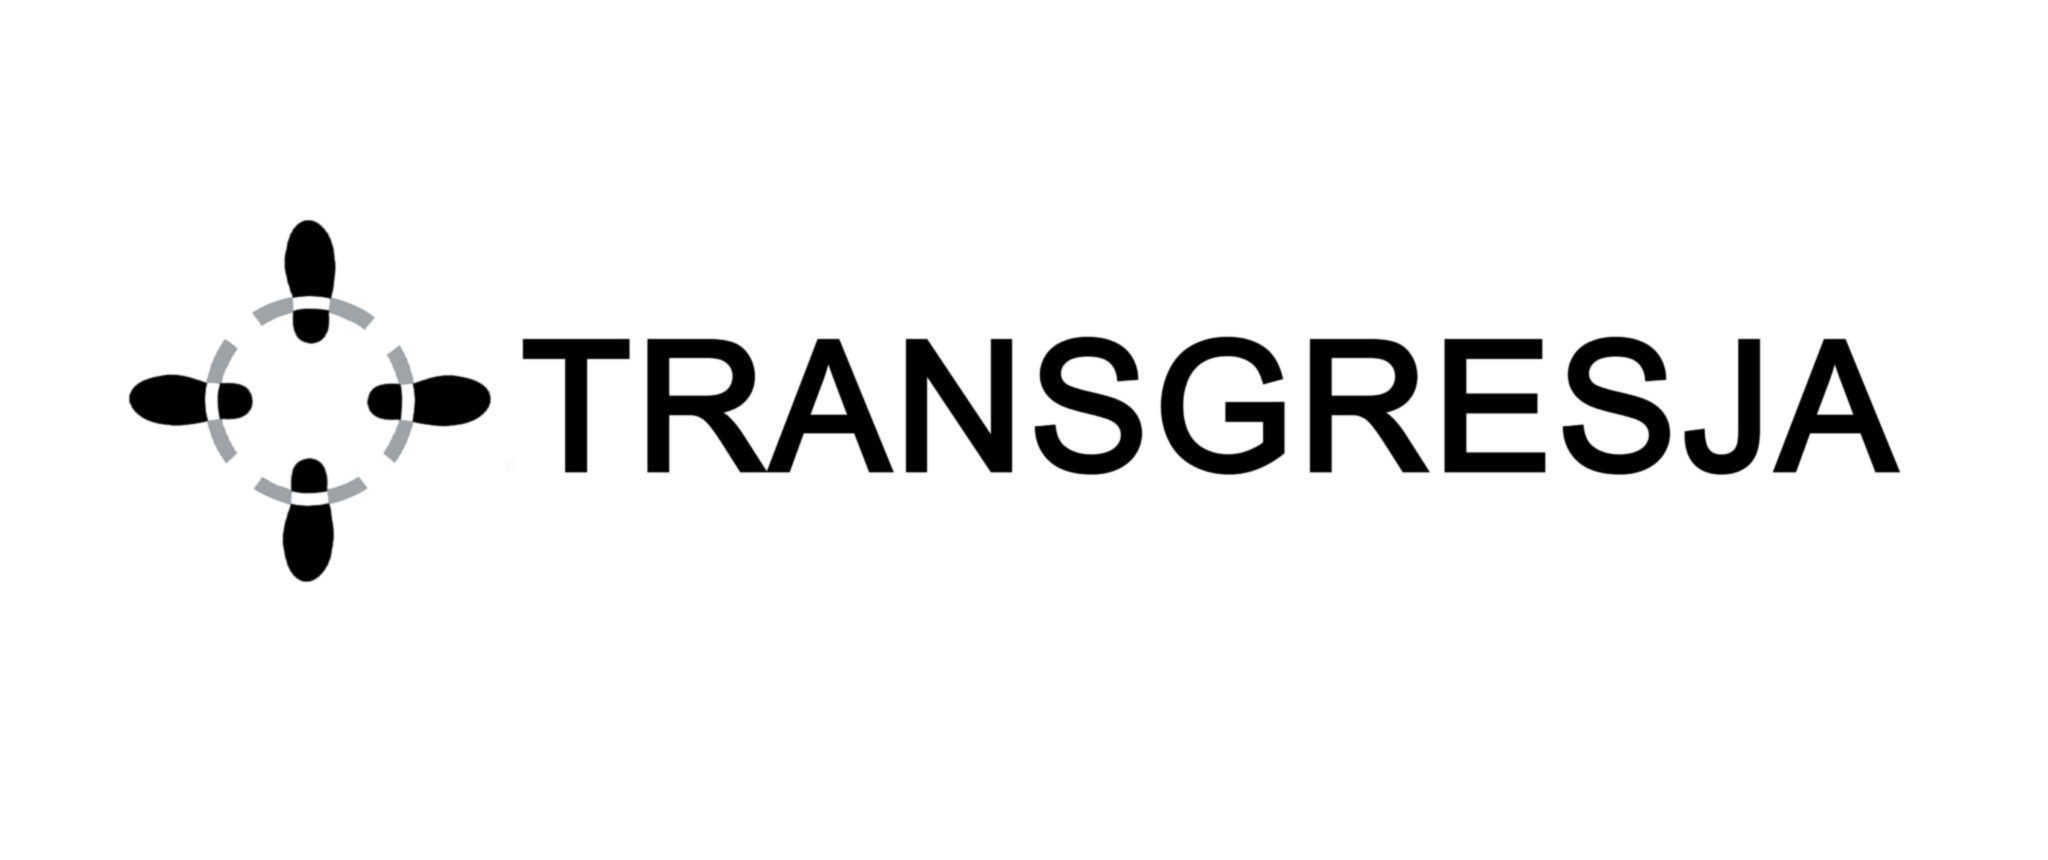 Fundacja Transgresja